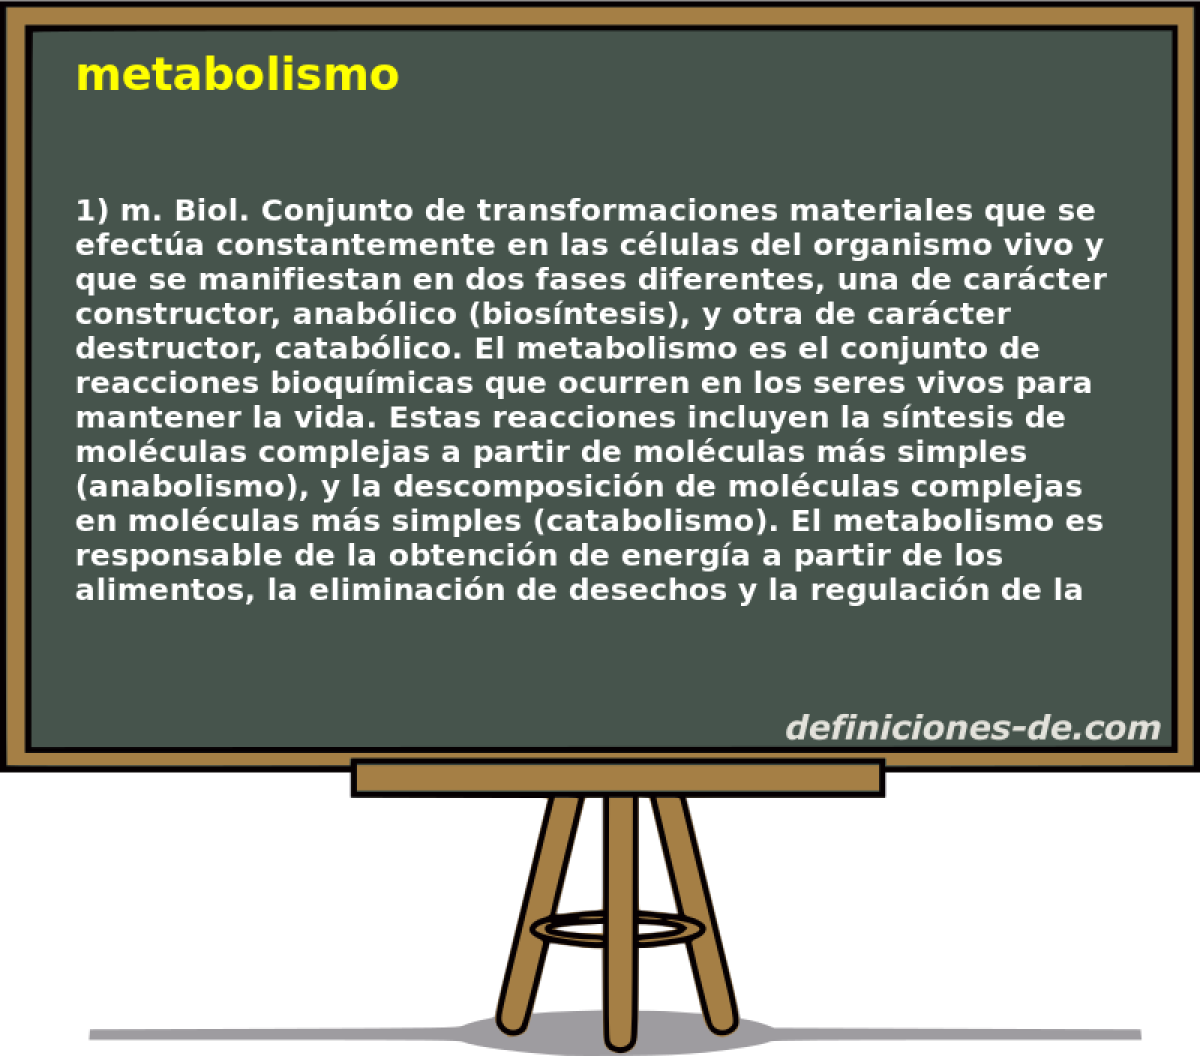 metabolismo 